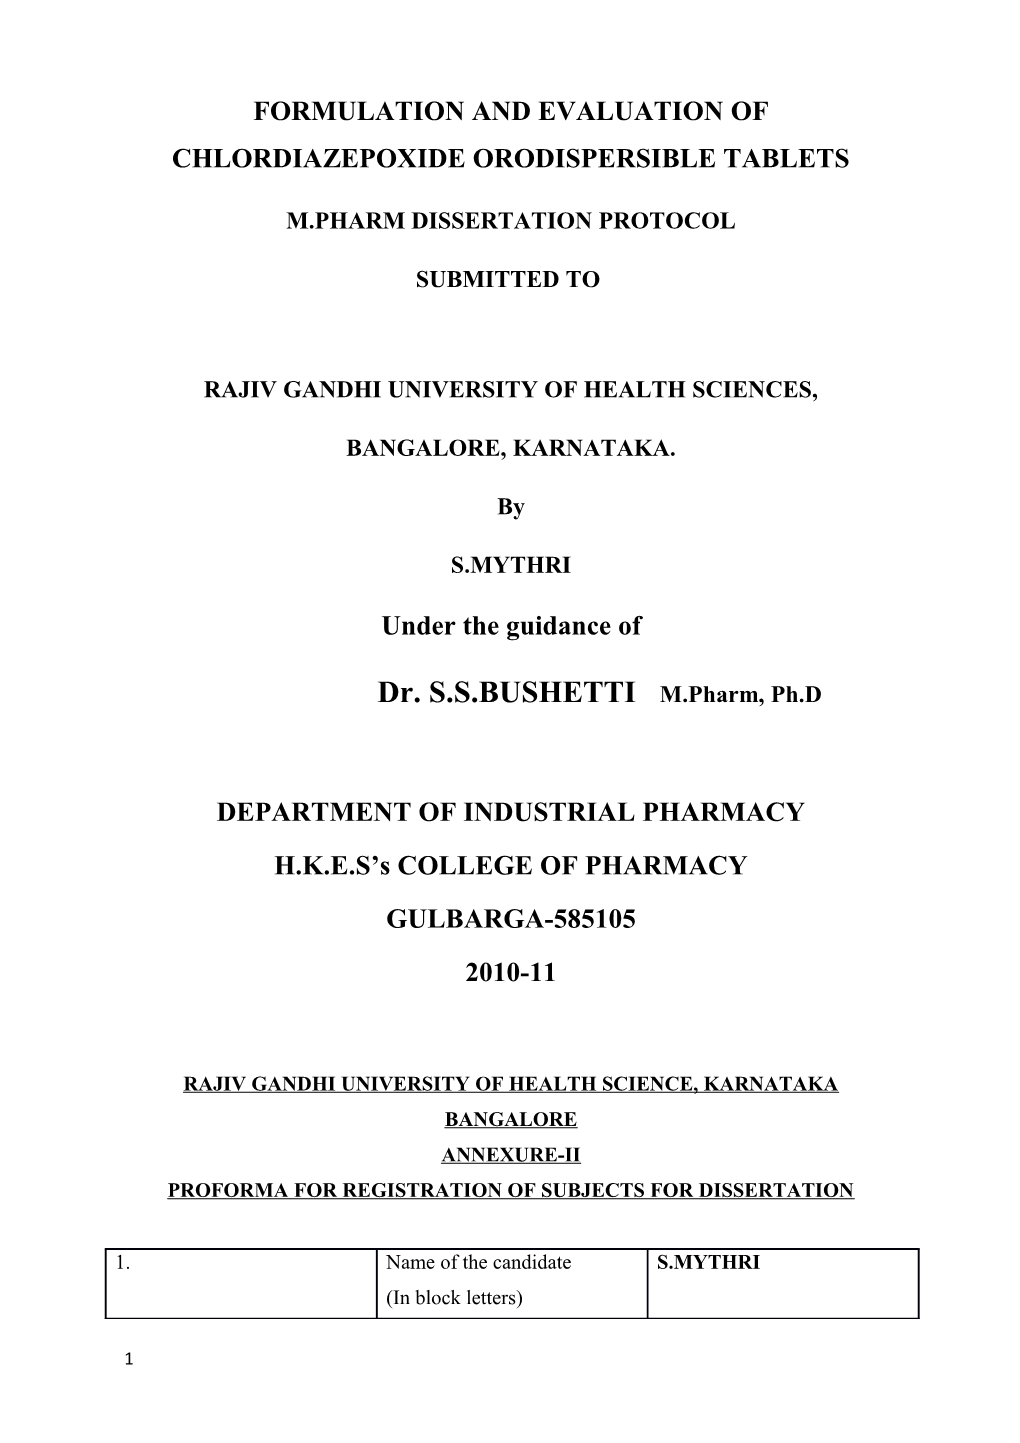 Rajiv Gandhi University of Health Science, Karnataka s1